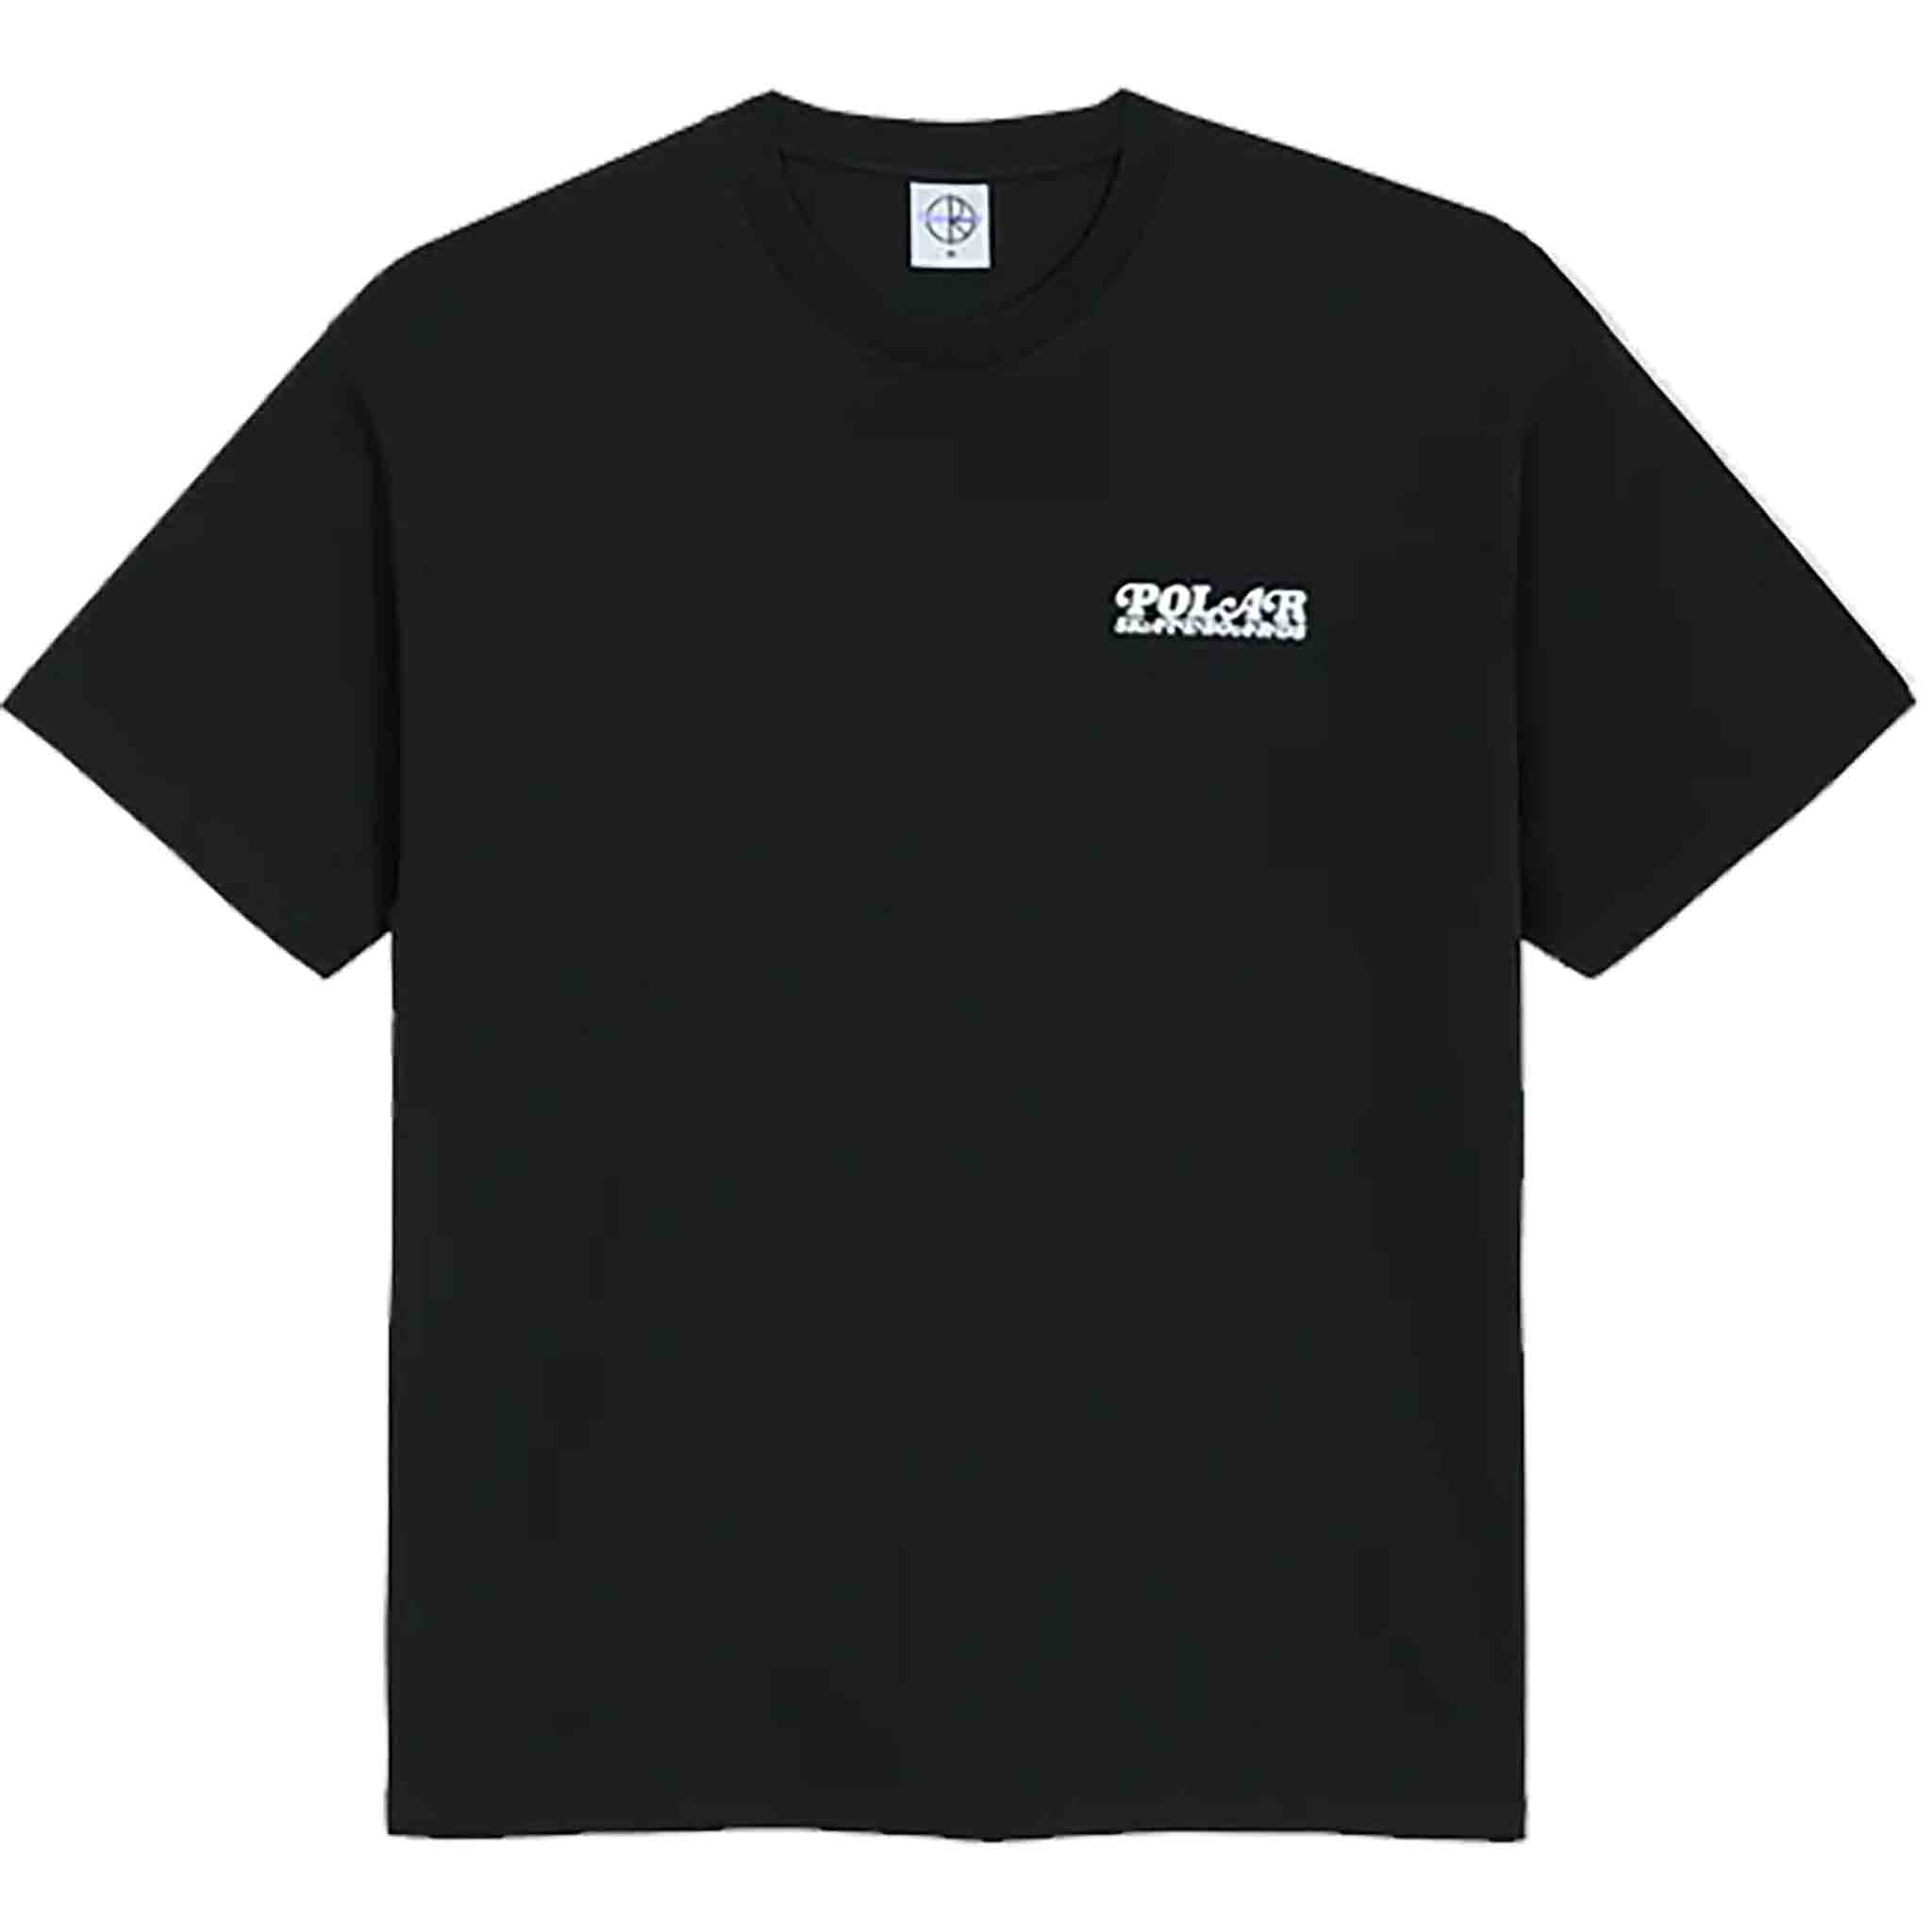 Polar Fields Tee Black T Shirt